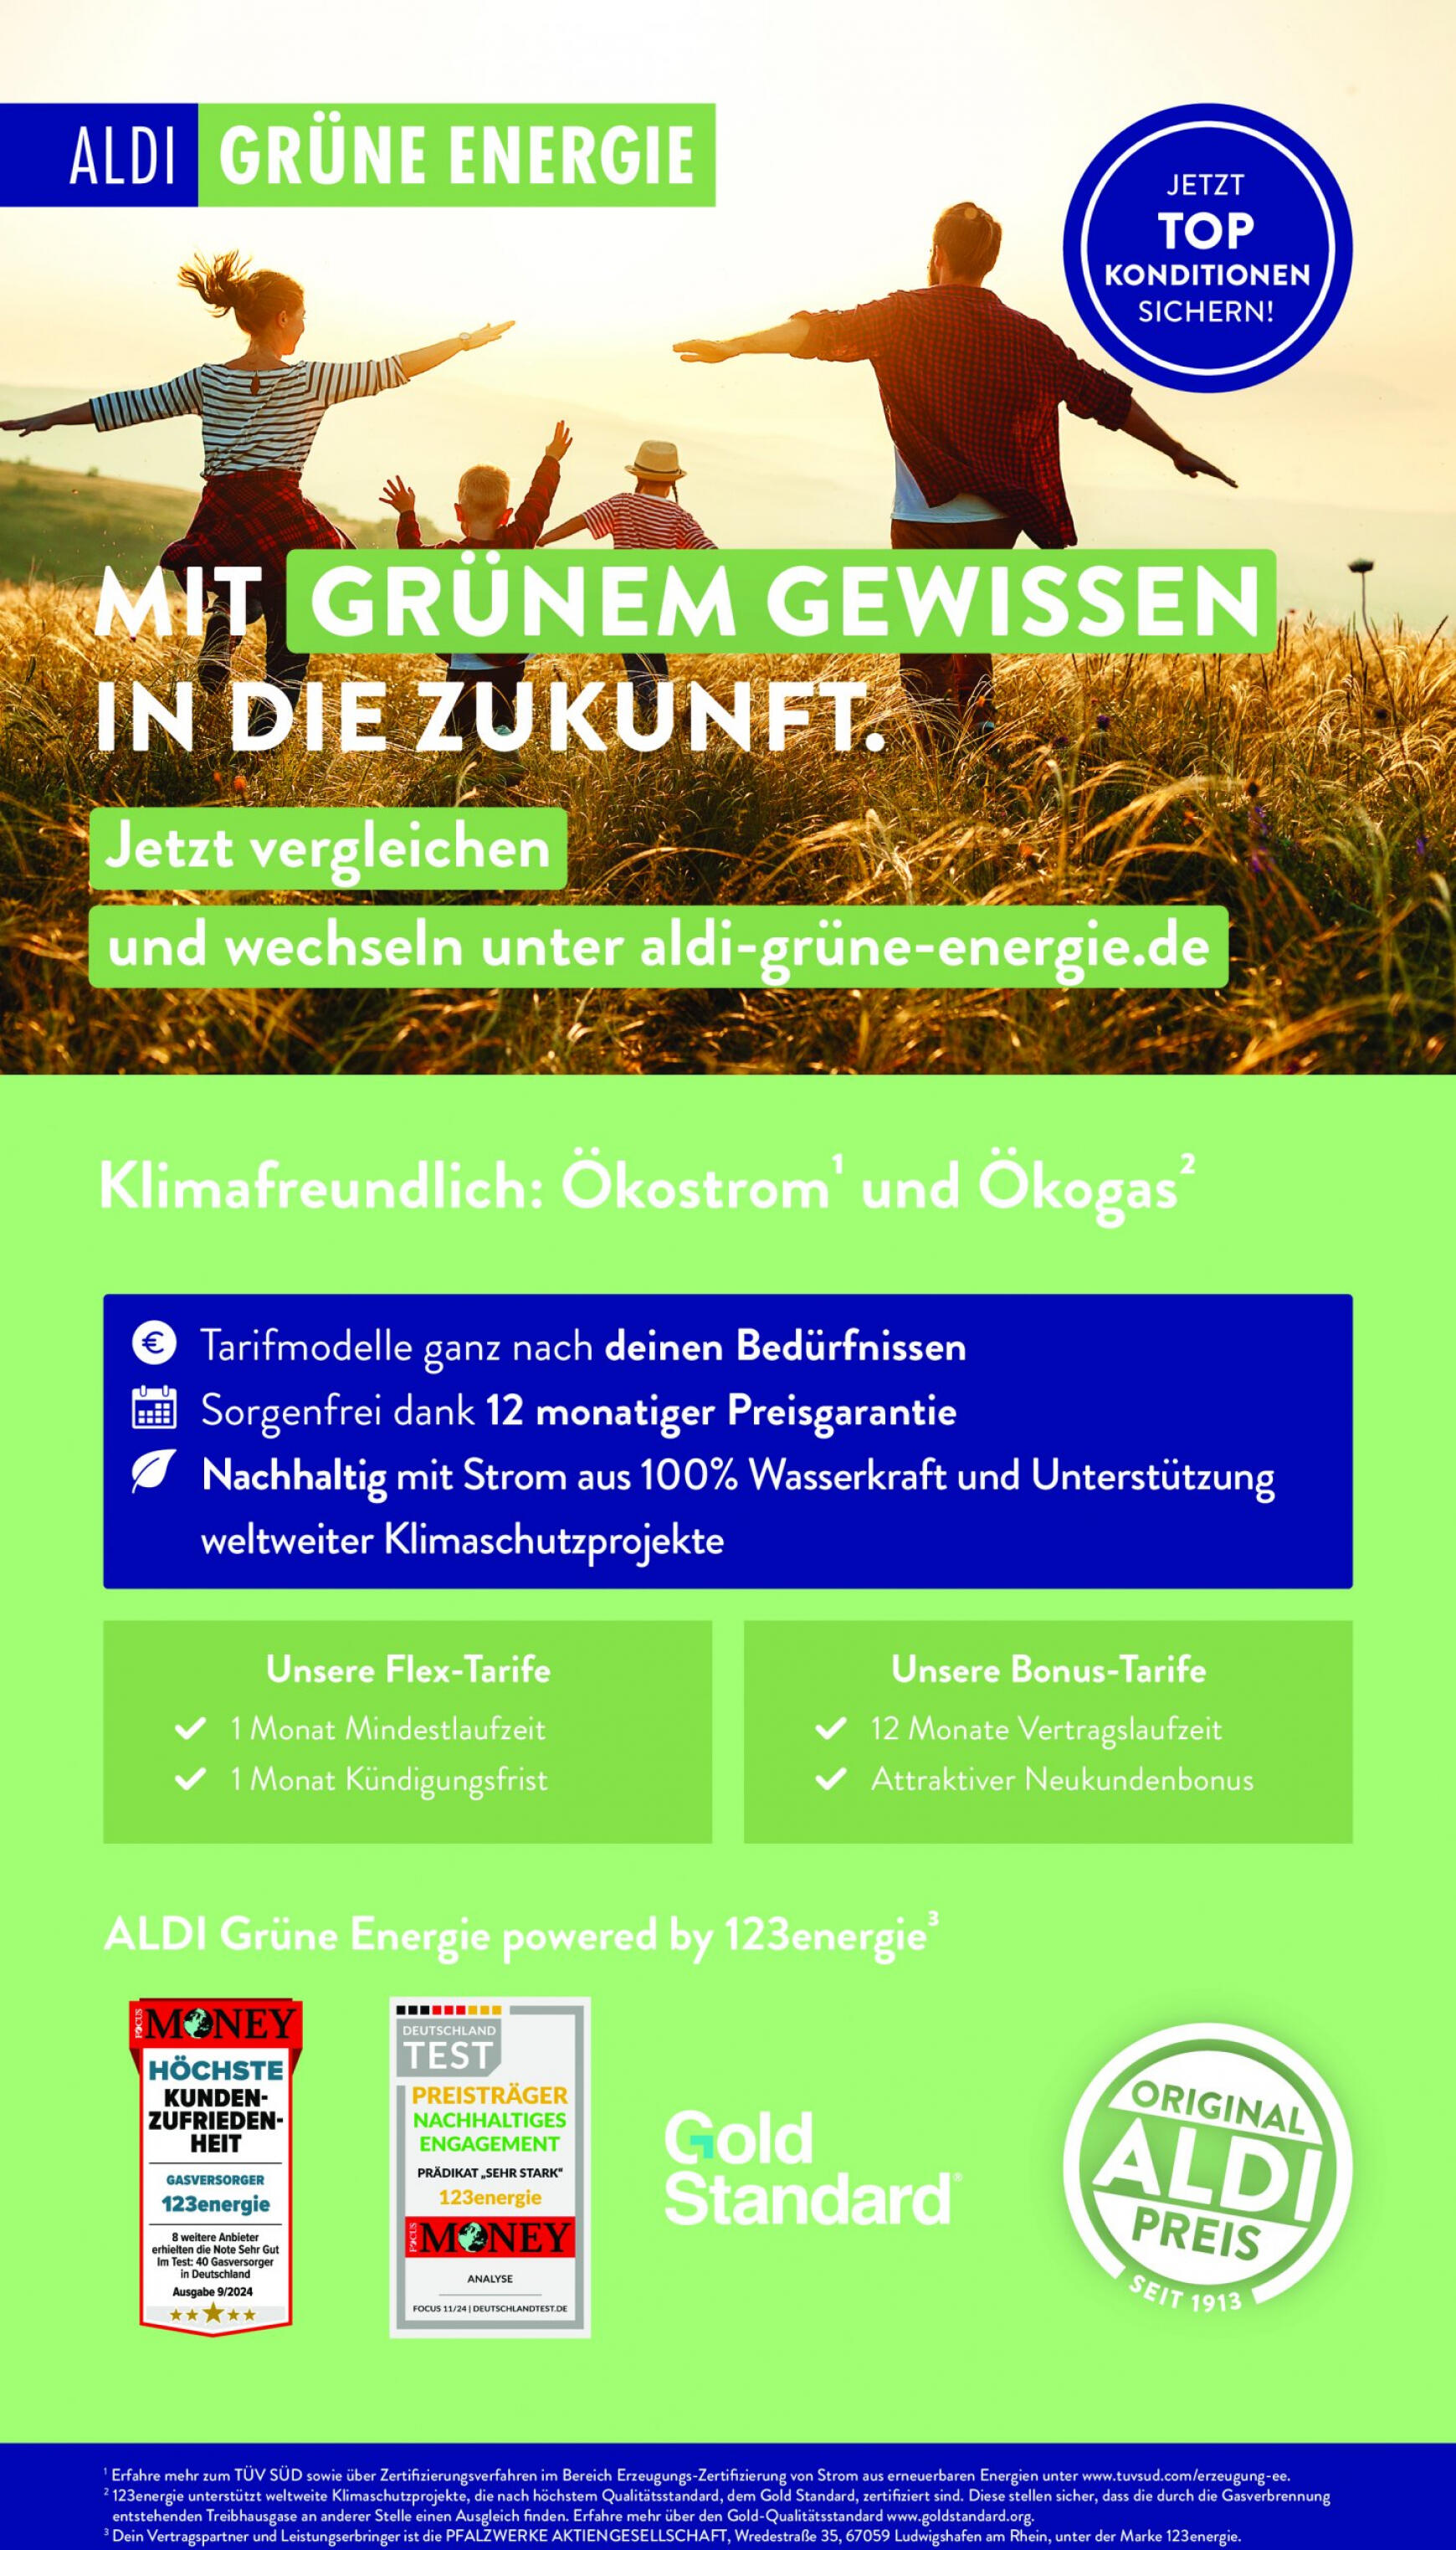 aldi - Flyer ALDI SÜD aktuell 22.04. - 27.04. - page: 9